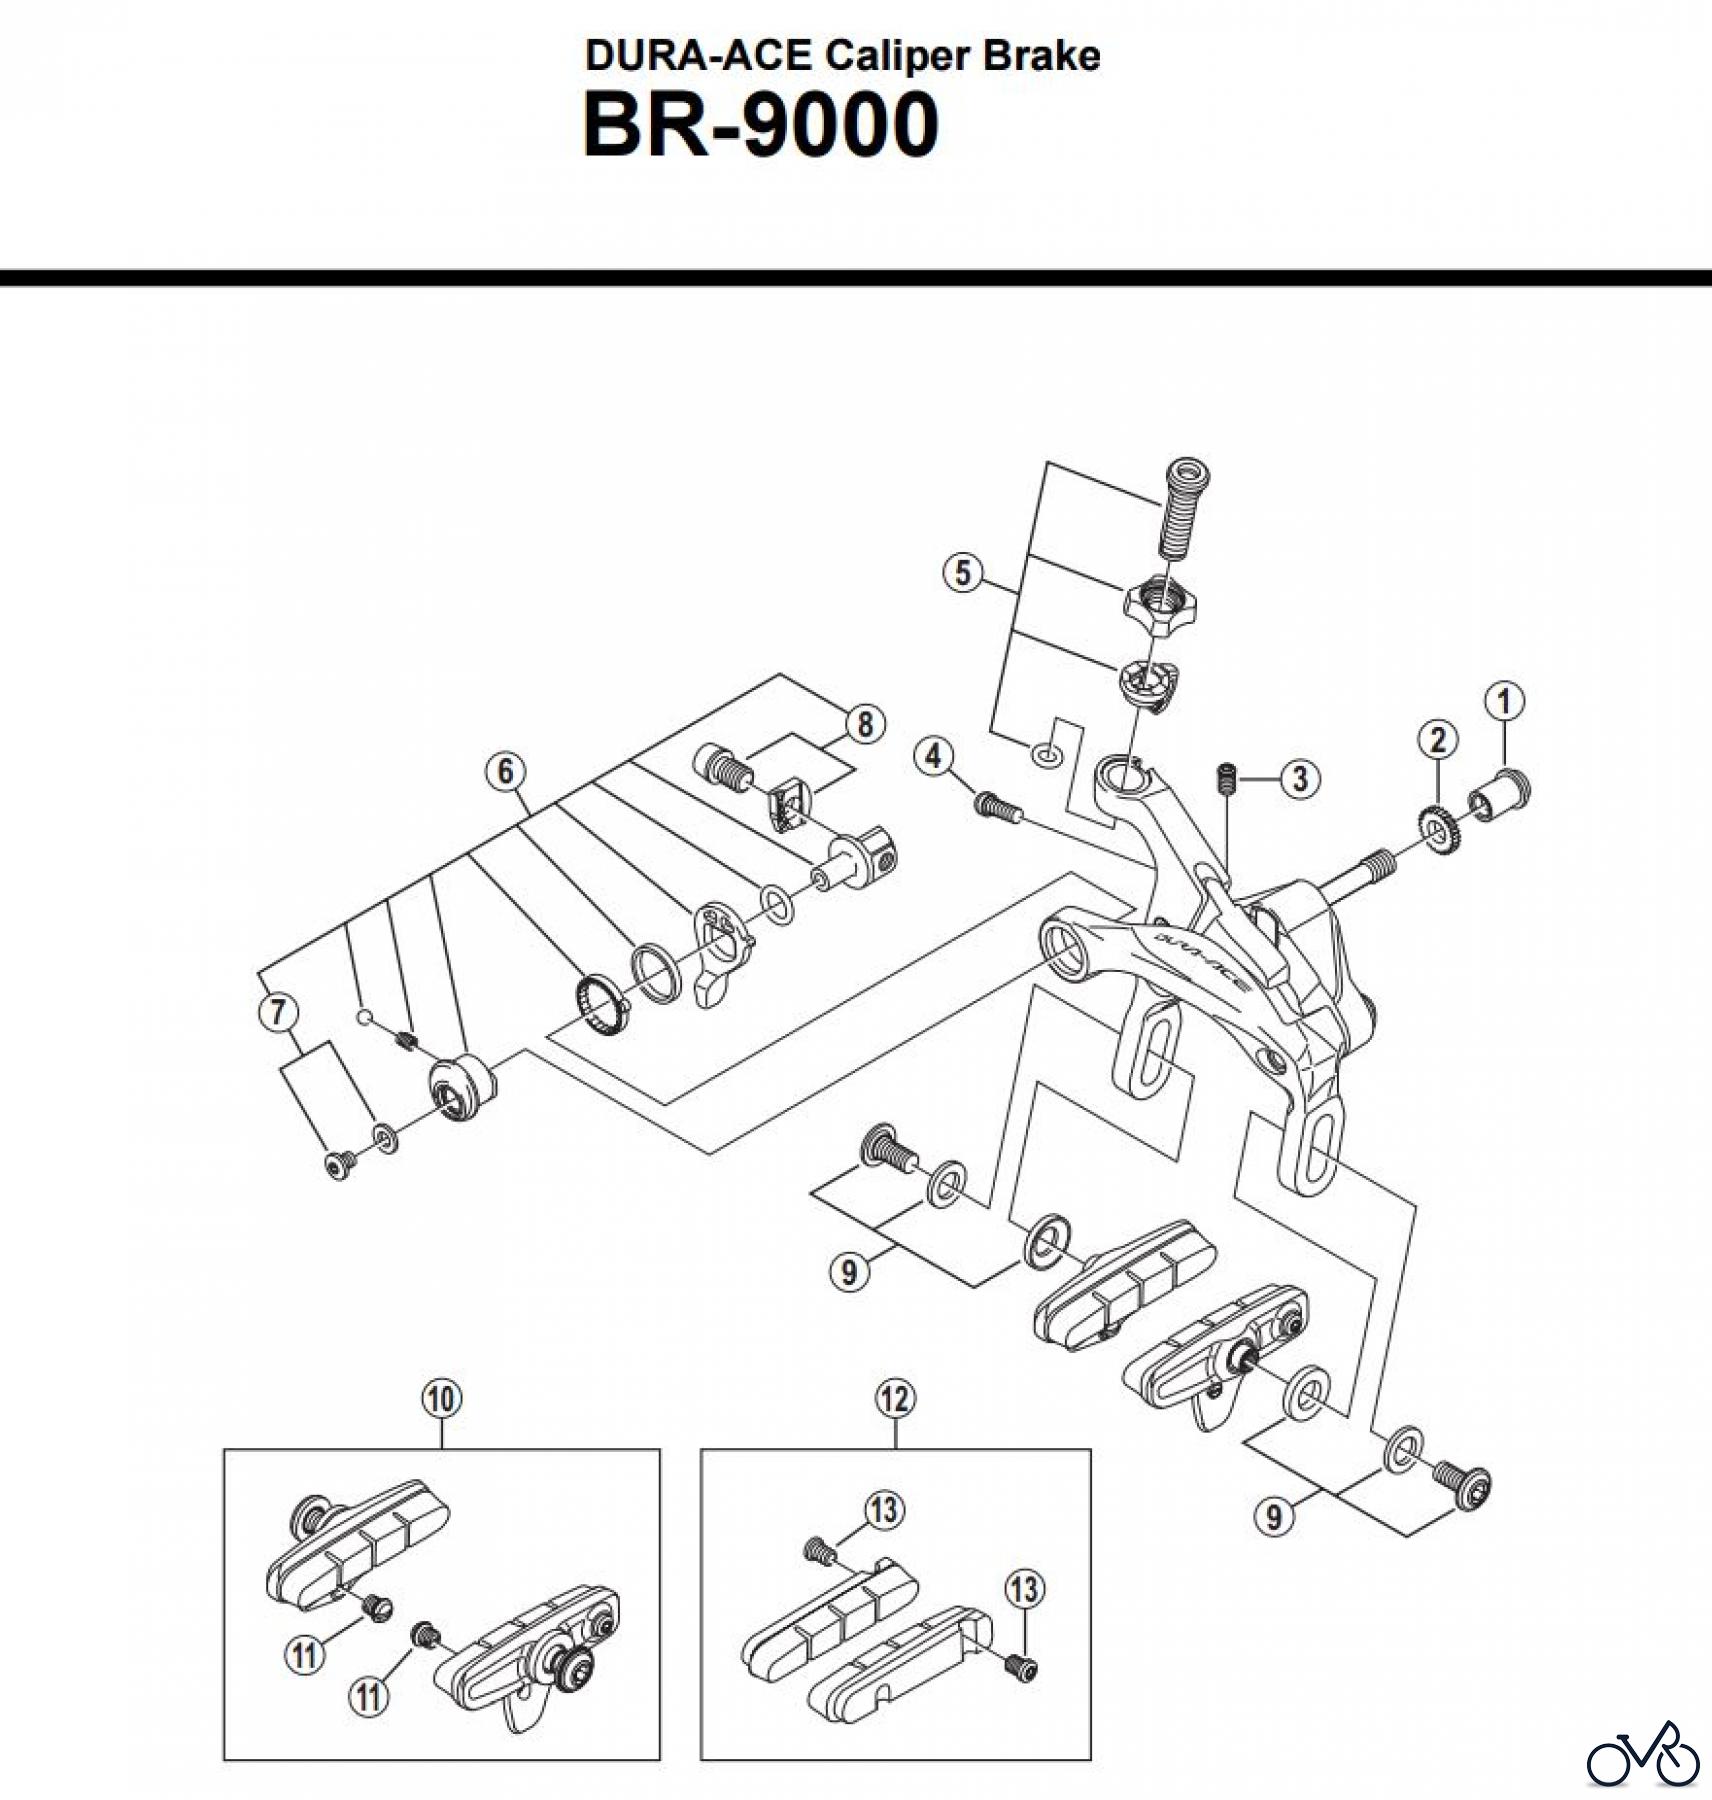  Shimano BR Brake - Bremse BR-9000 -3322A DURA-ACE Caliper Brake